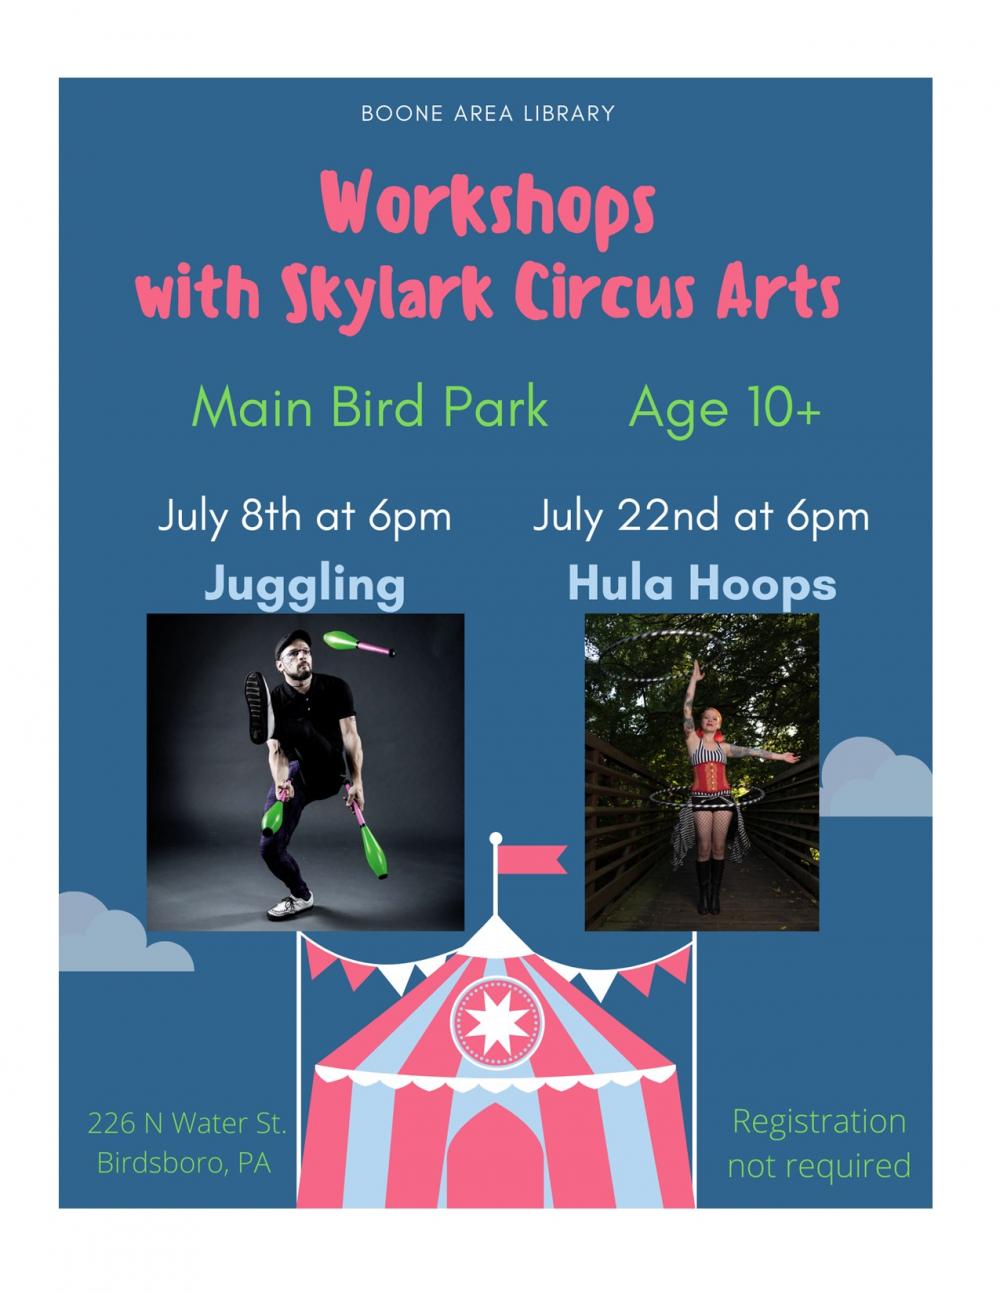 Hula Hoop Workshop with Skylark Circus Arts